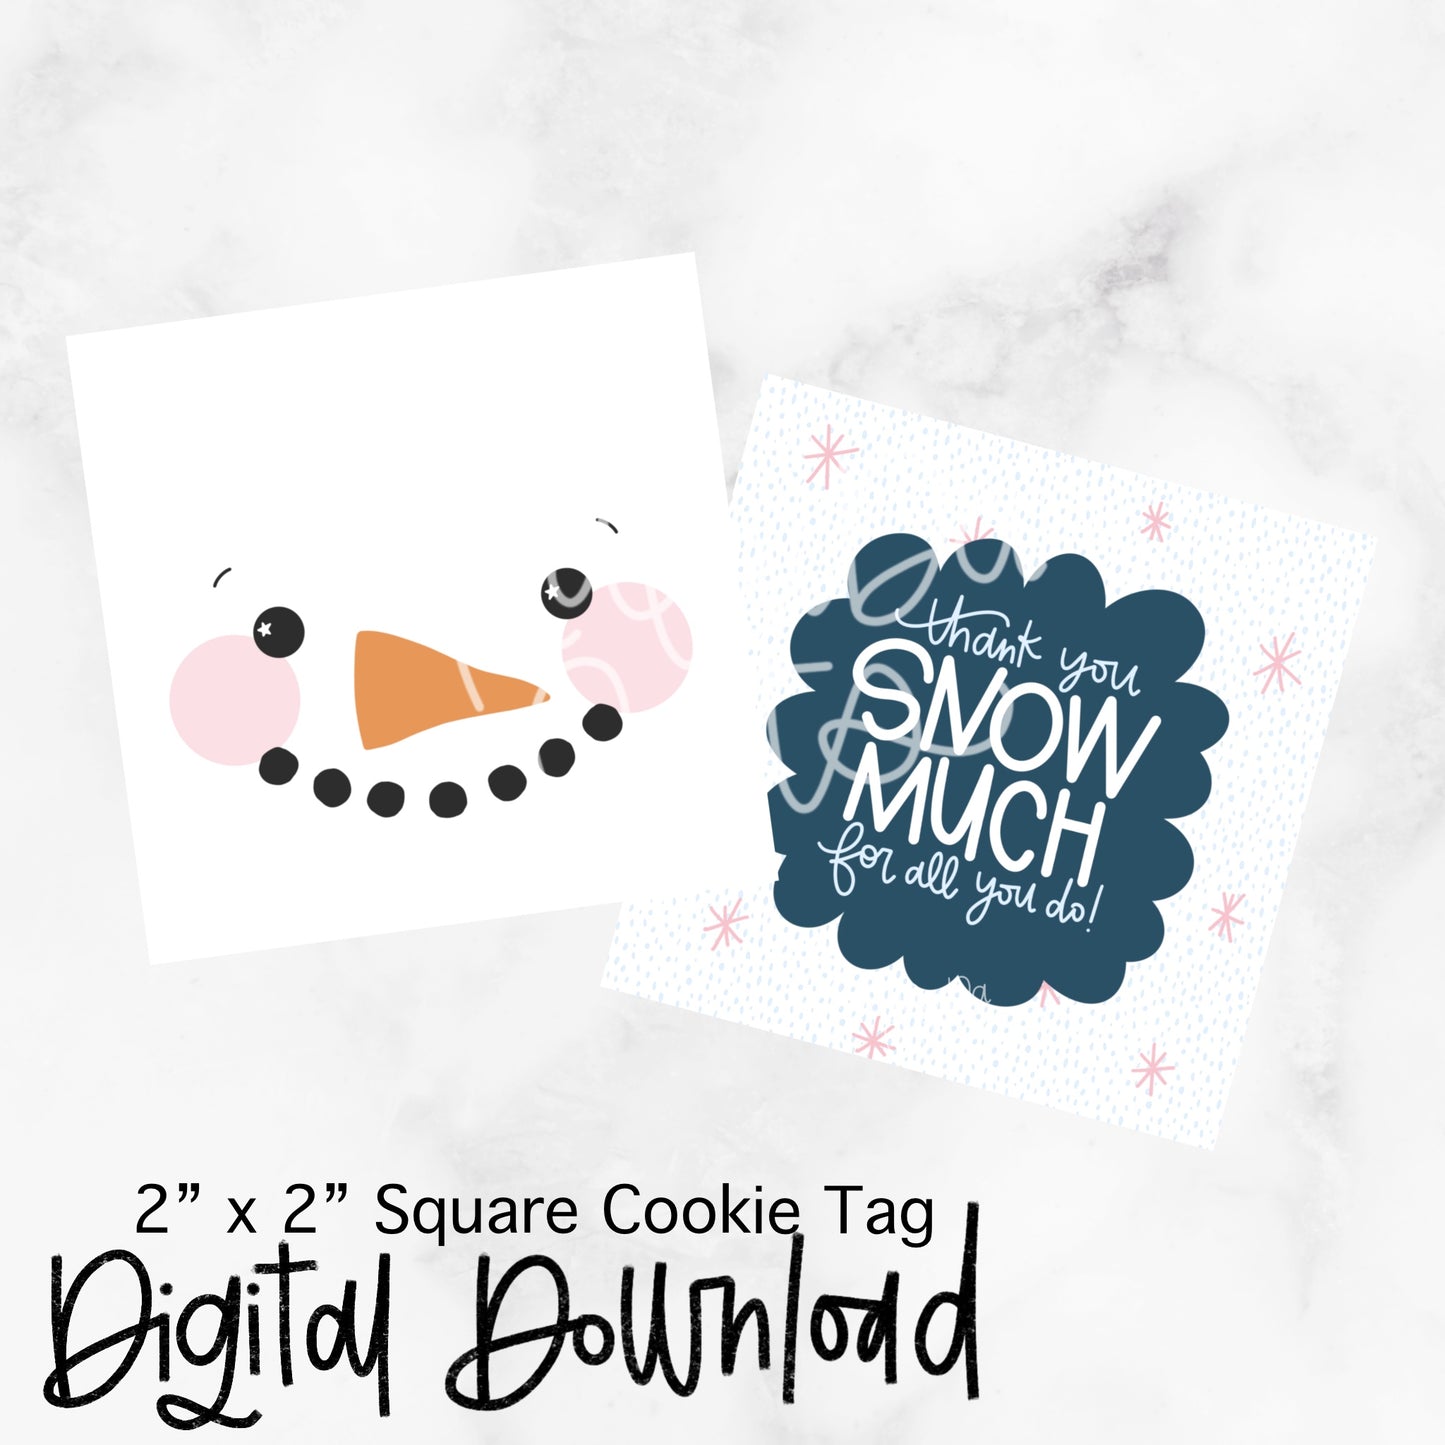 Snowman / Snow Much Tag - 2x2 Square - Digital Download